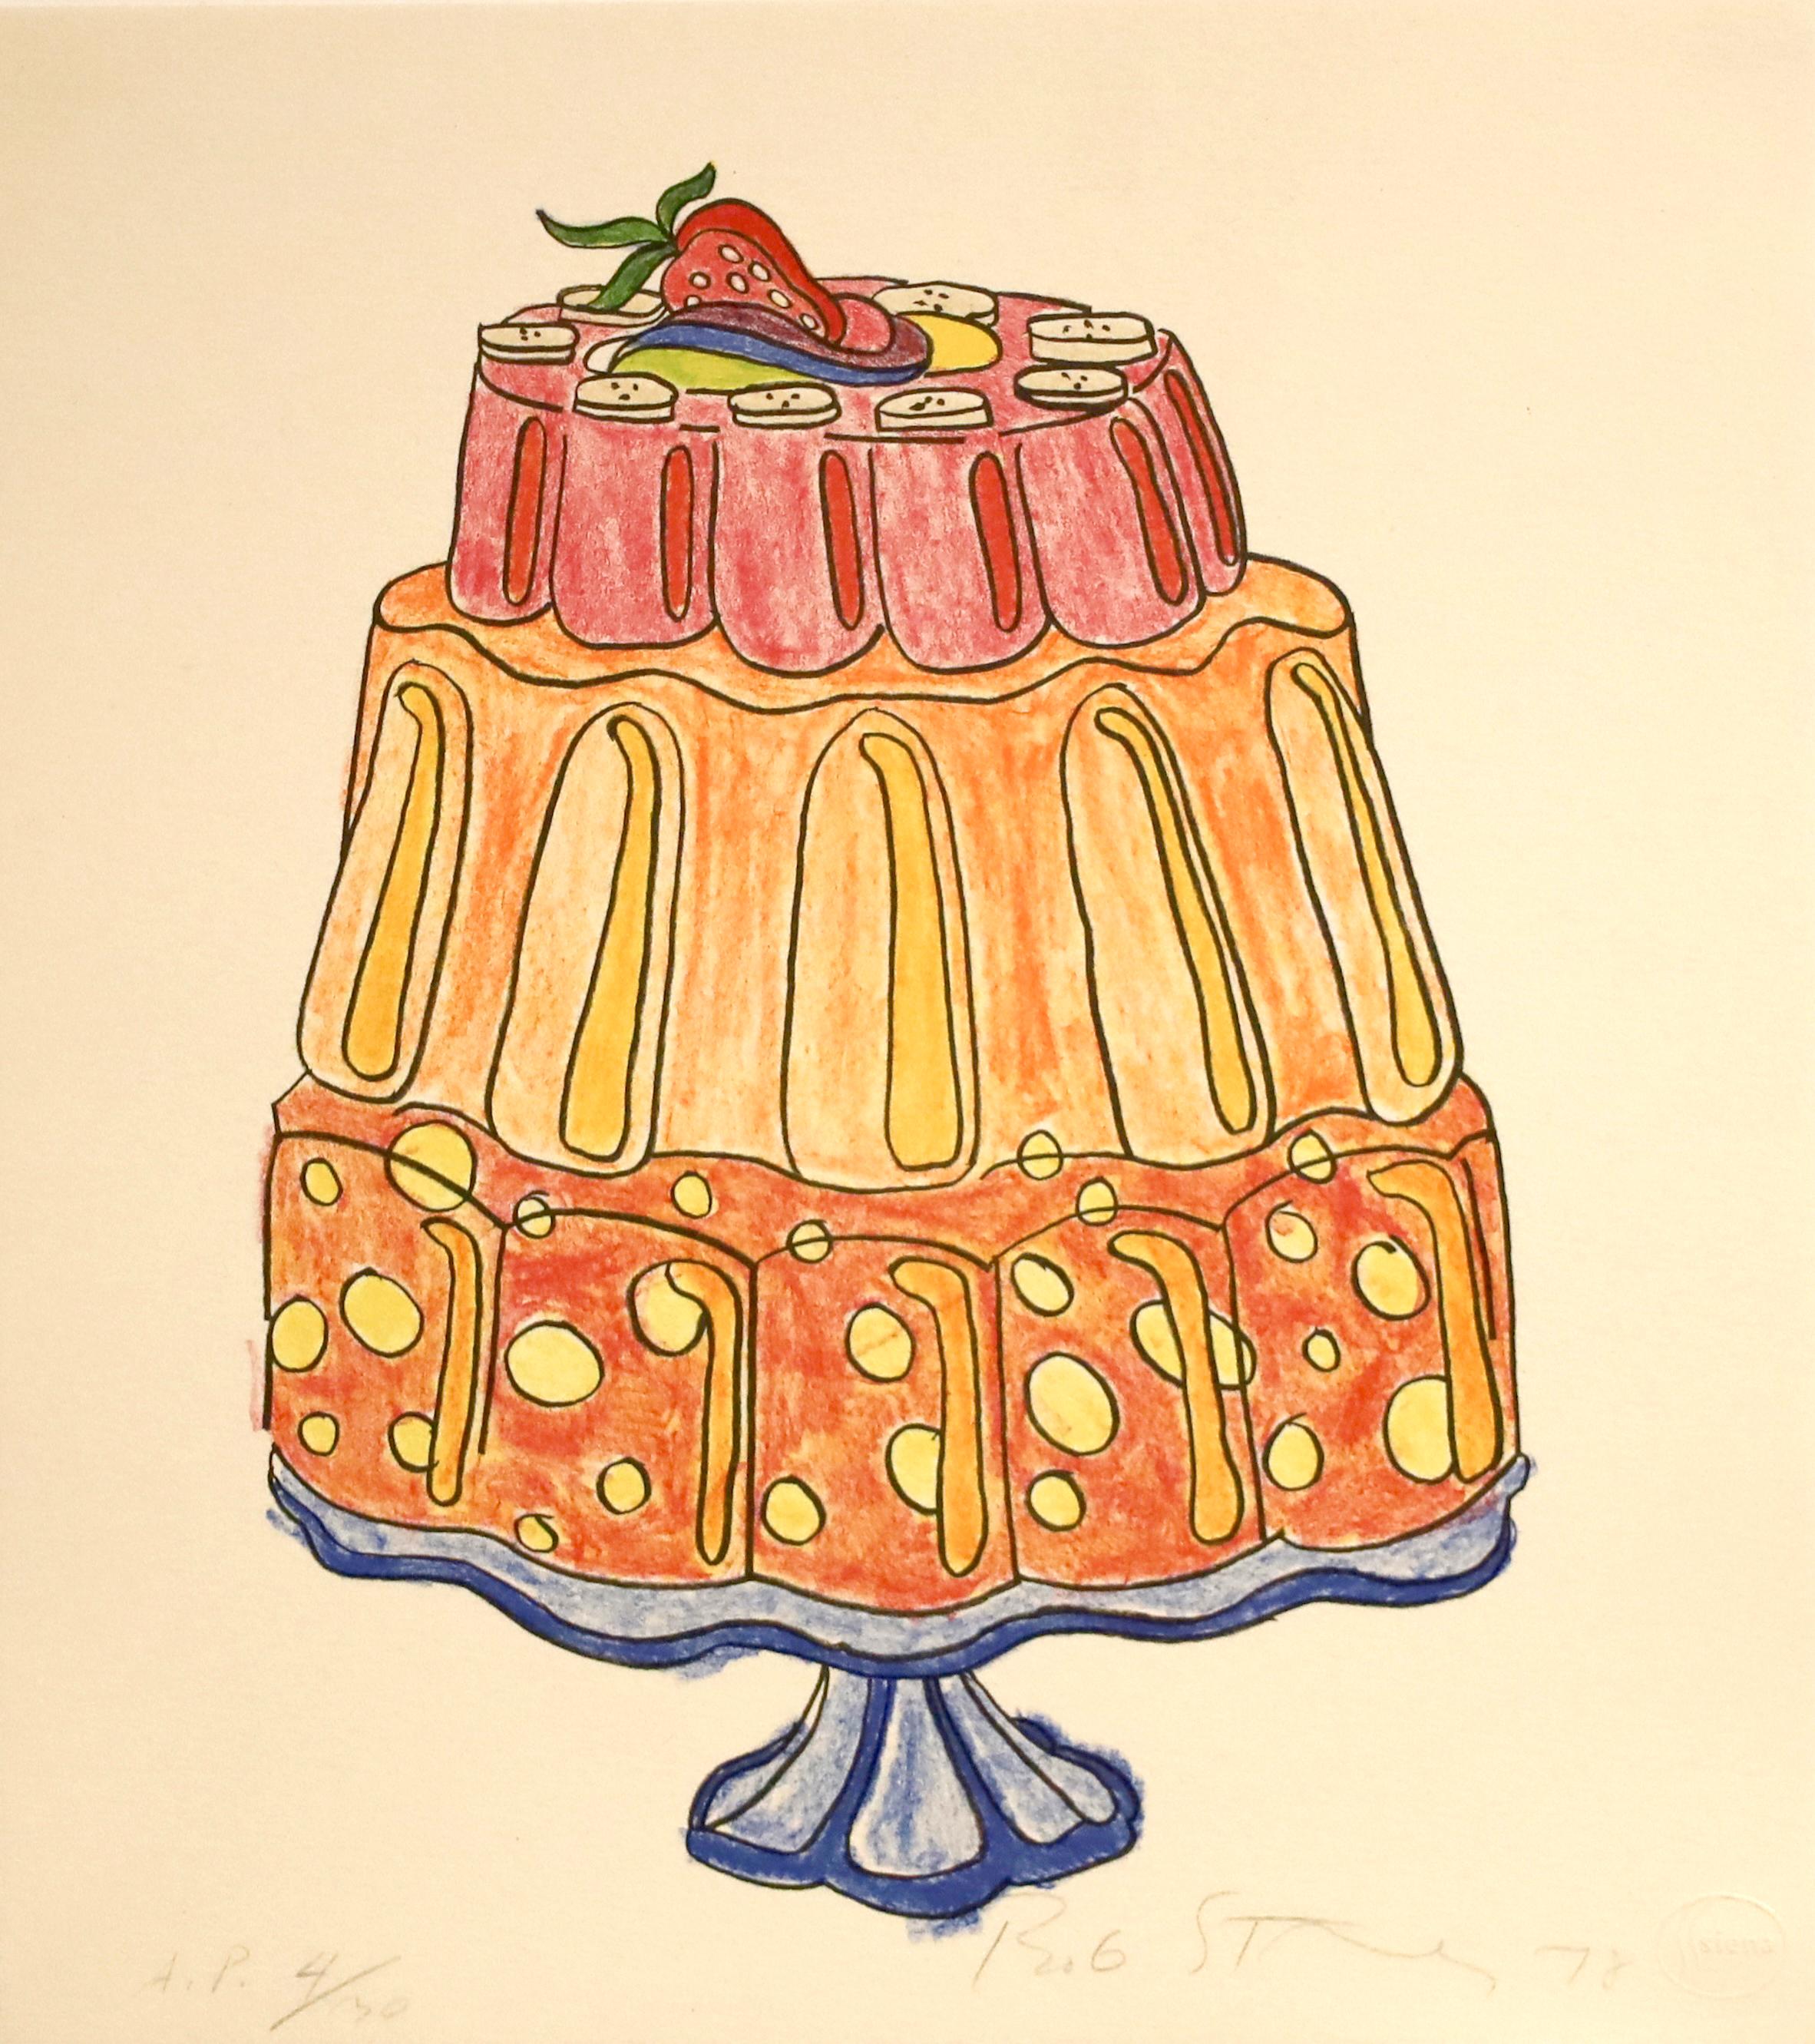 Robert Bob Stanley Print - "Cake"